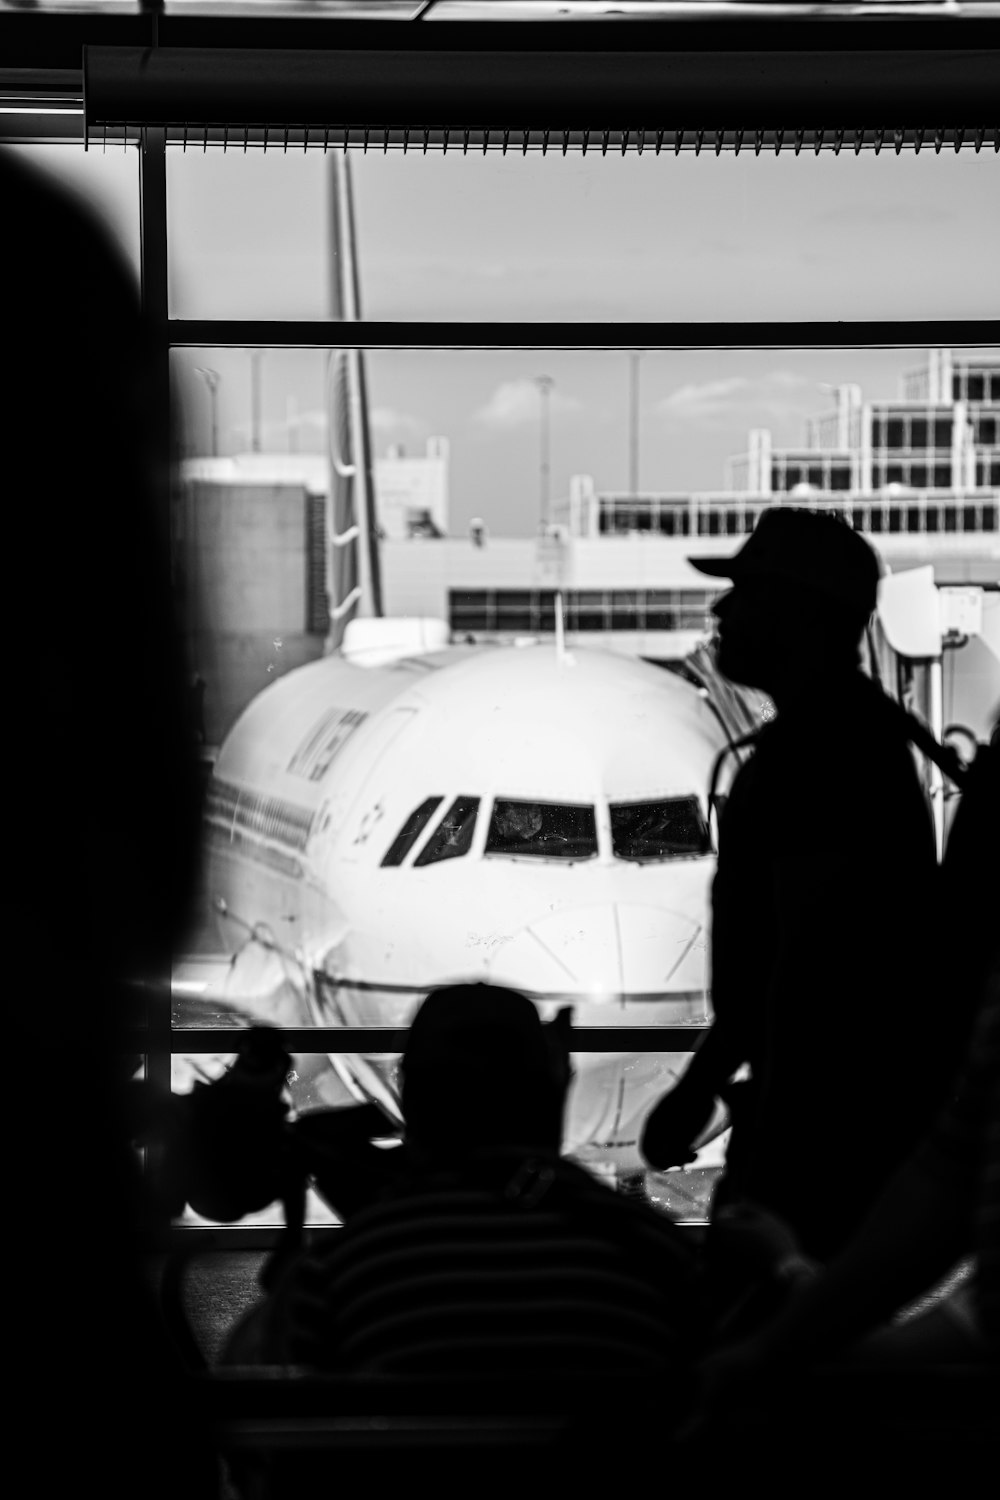 a man stands next to a plane